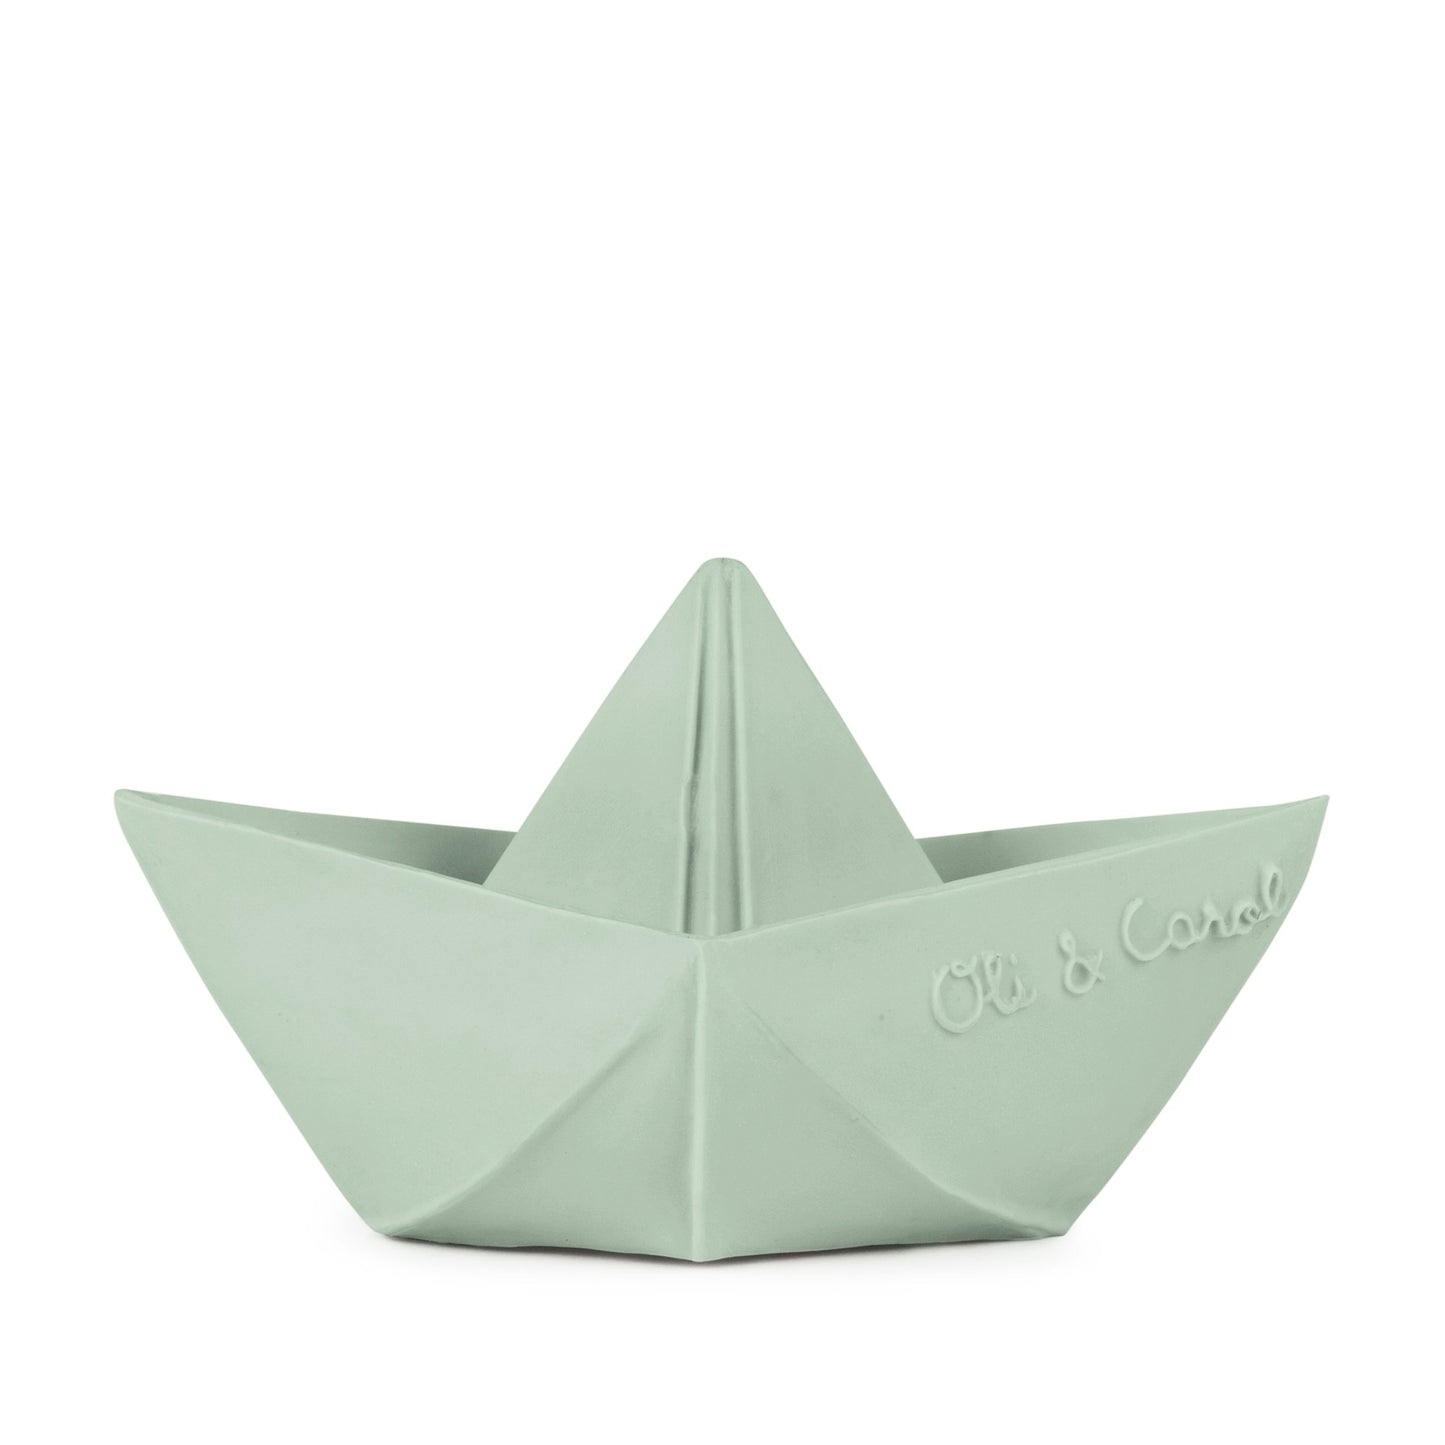 Oli & Carol Origami Boat Teether